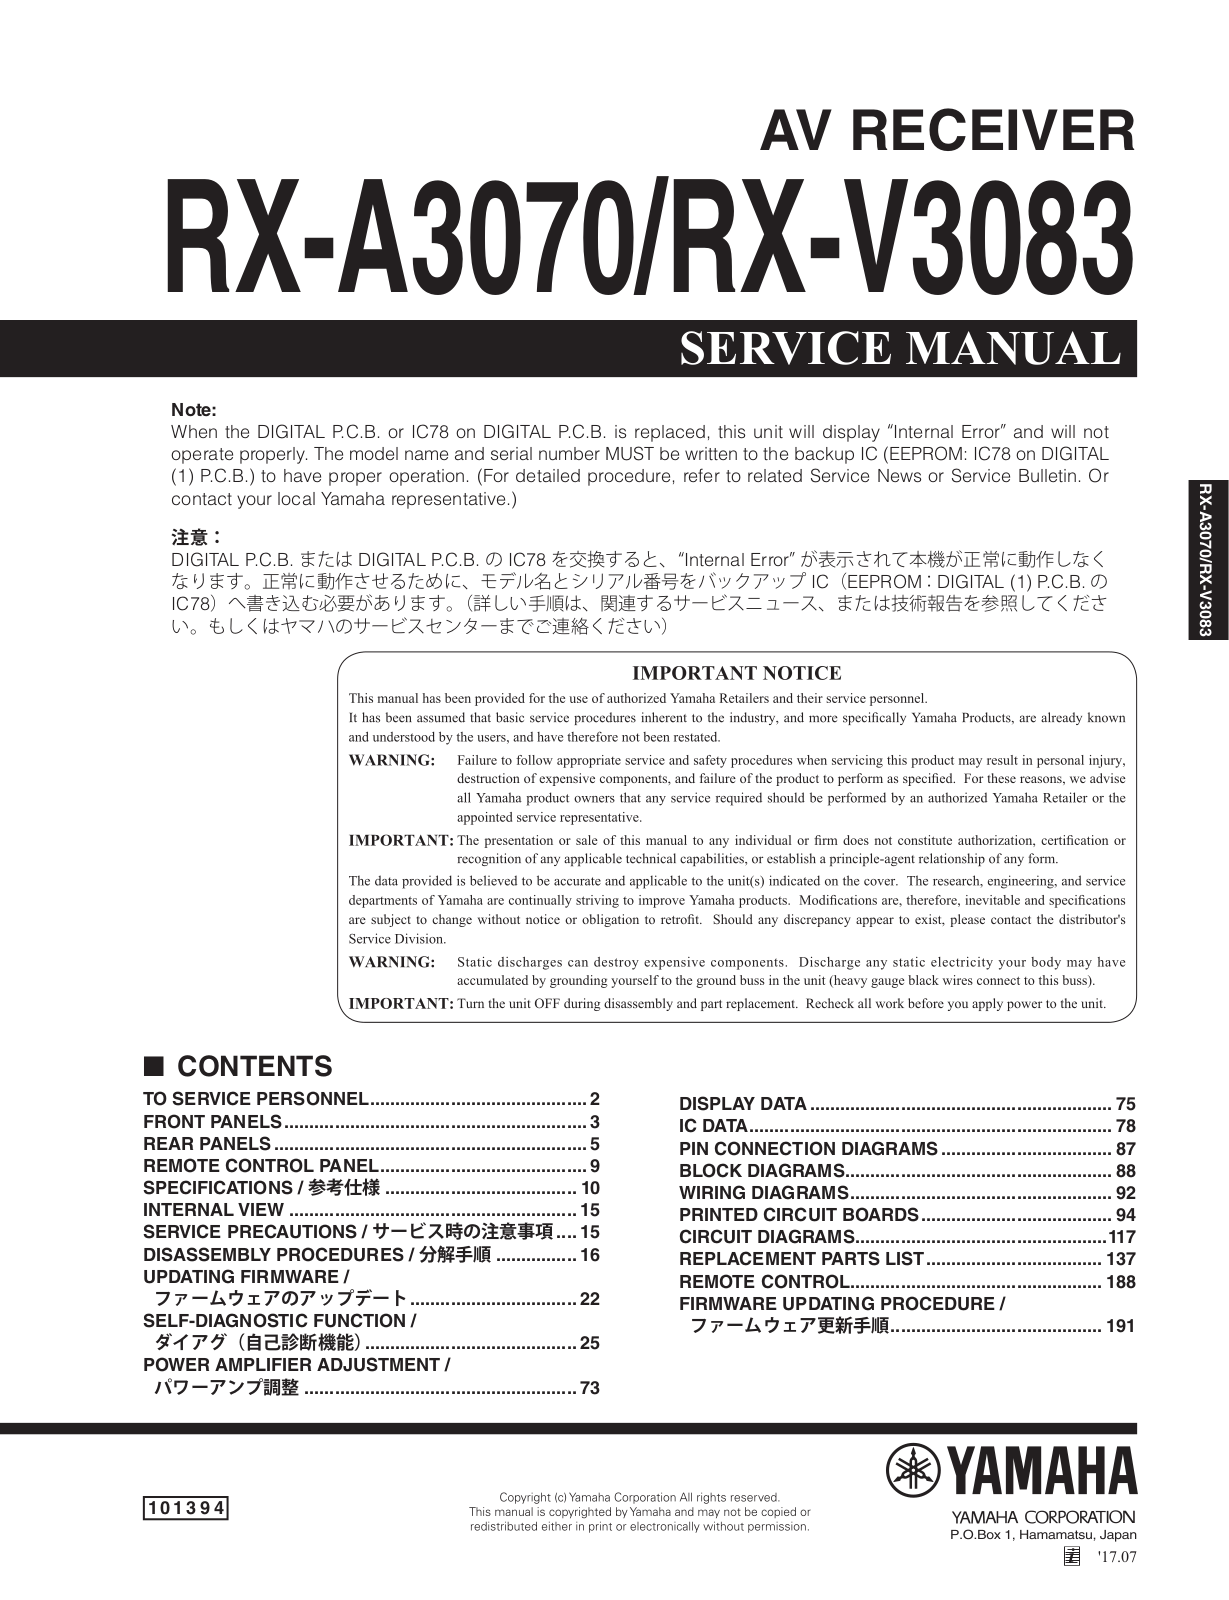 Yamaha RX-A3070, RX-V3083 Service manual